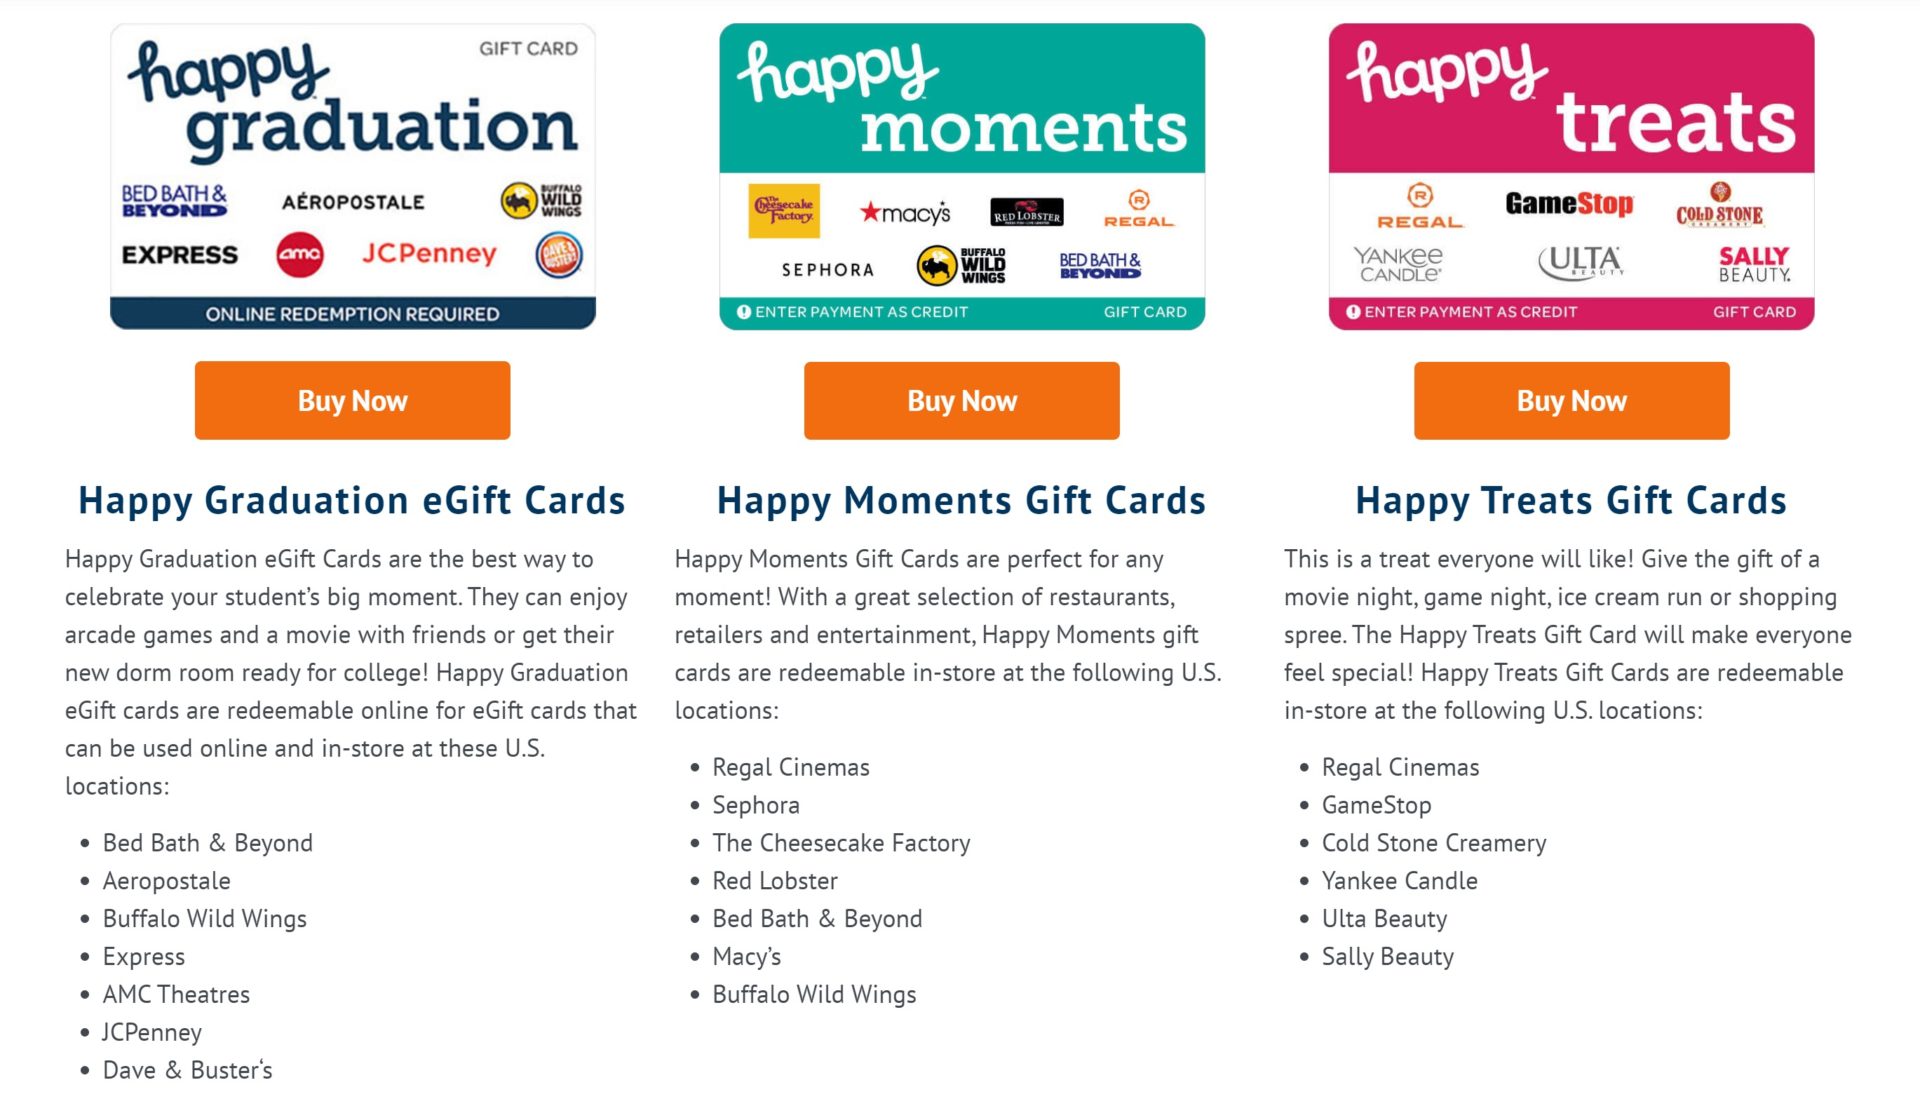 (EXPIRED) 7 back on Happy gift cards at via TopCashBack